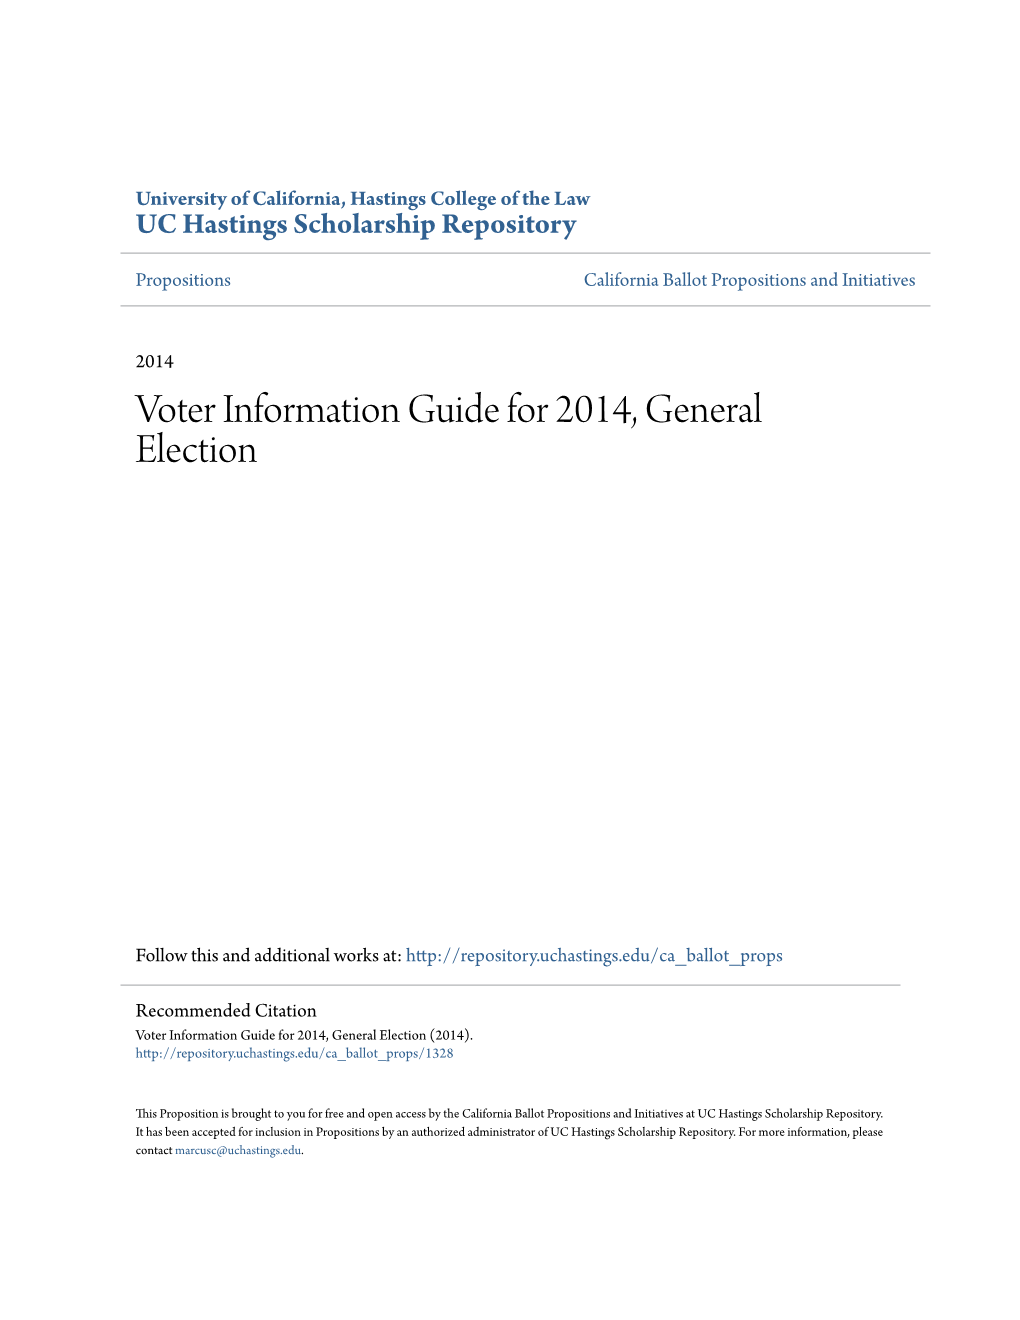 Voter Information Guide for 2014, General Election